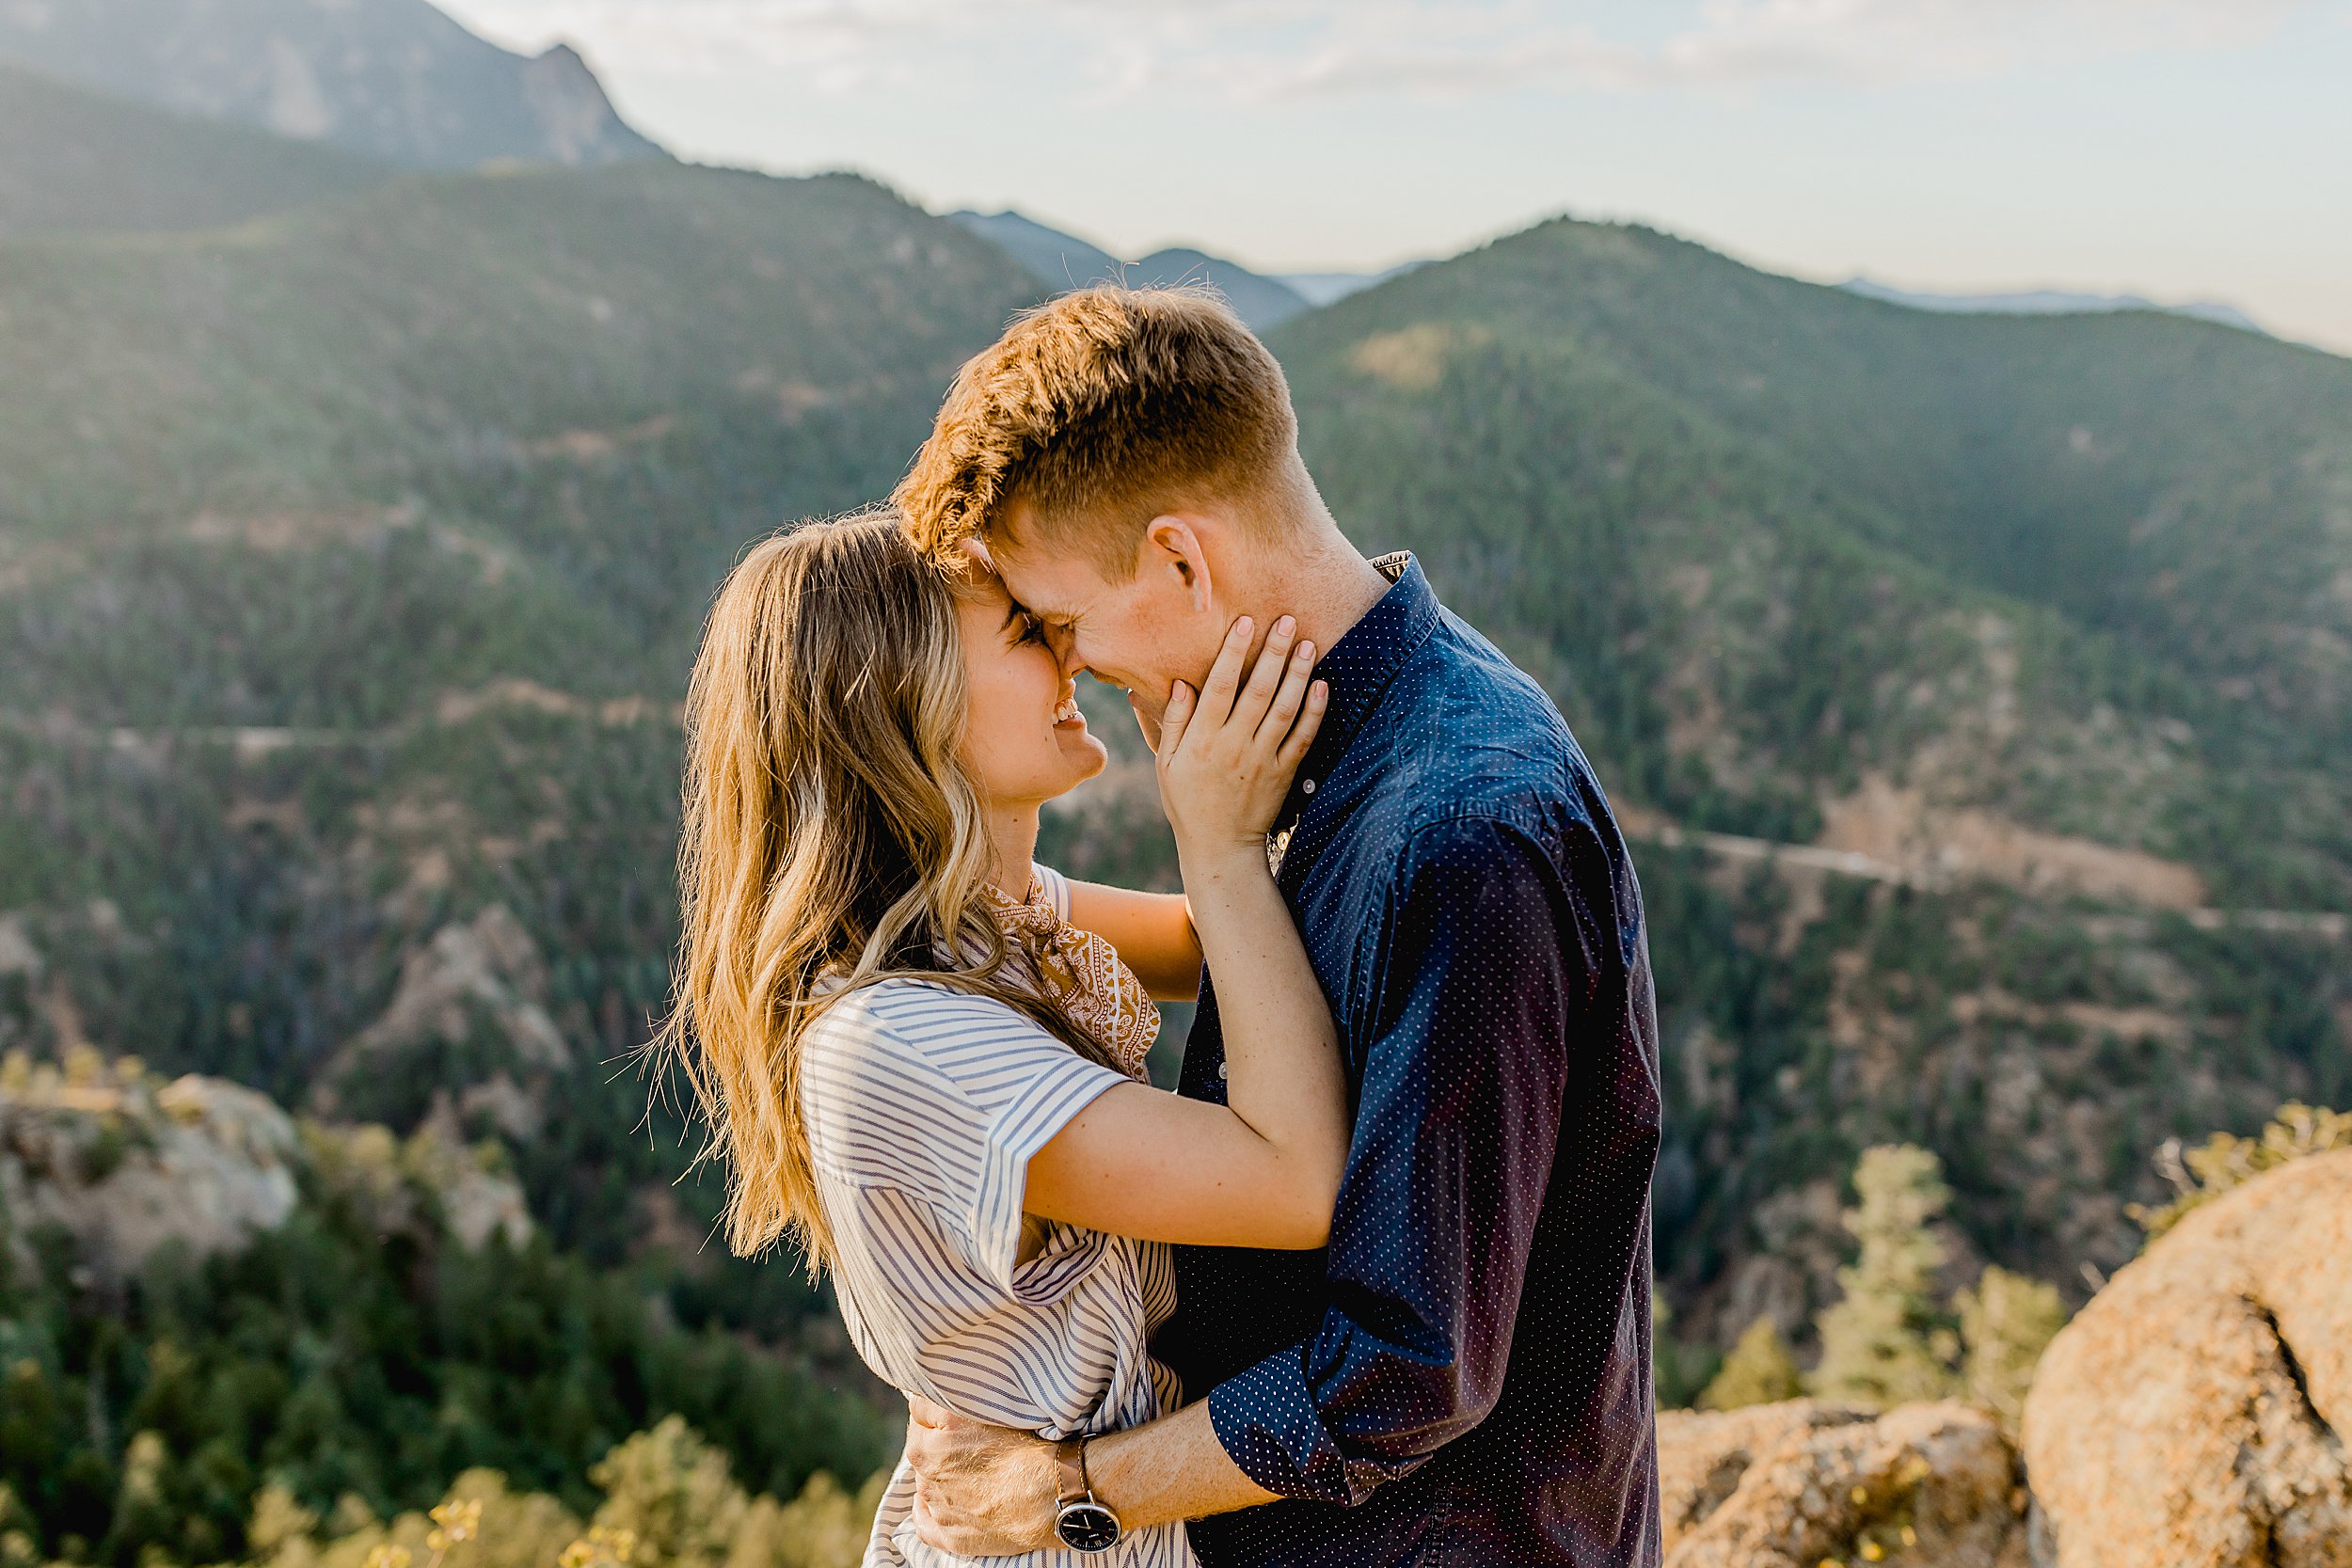 colorado mountain engagement photos, photographer captures couples hiking engagement photos in gorgeous colorado mountains